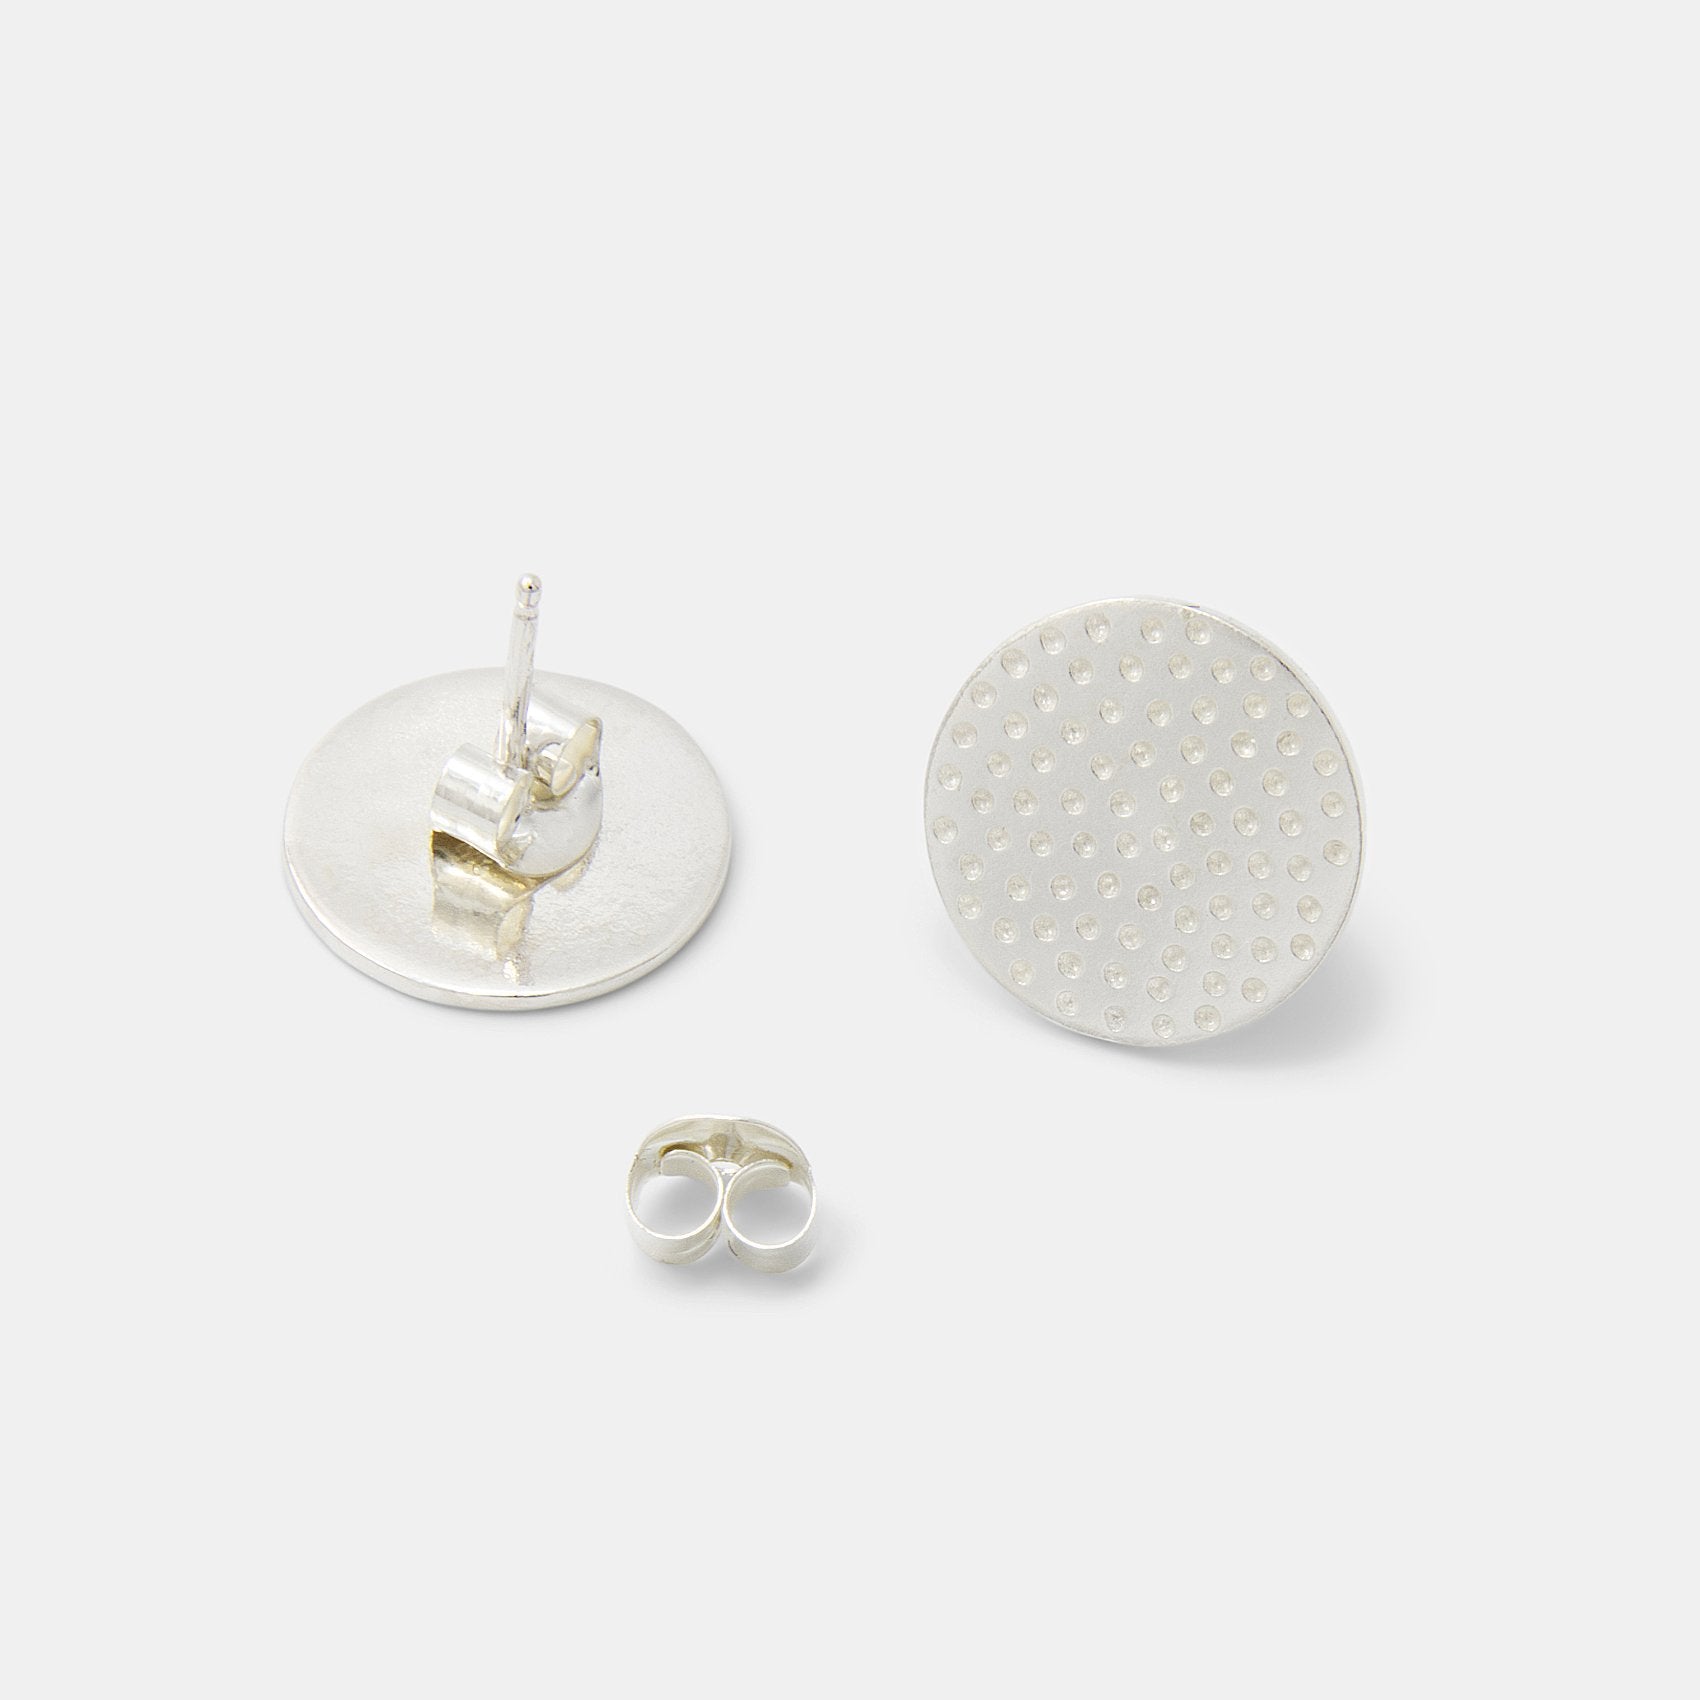 Dots texture silver stud earrings - Simone Walsh Jewellery Australia